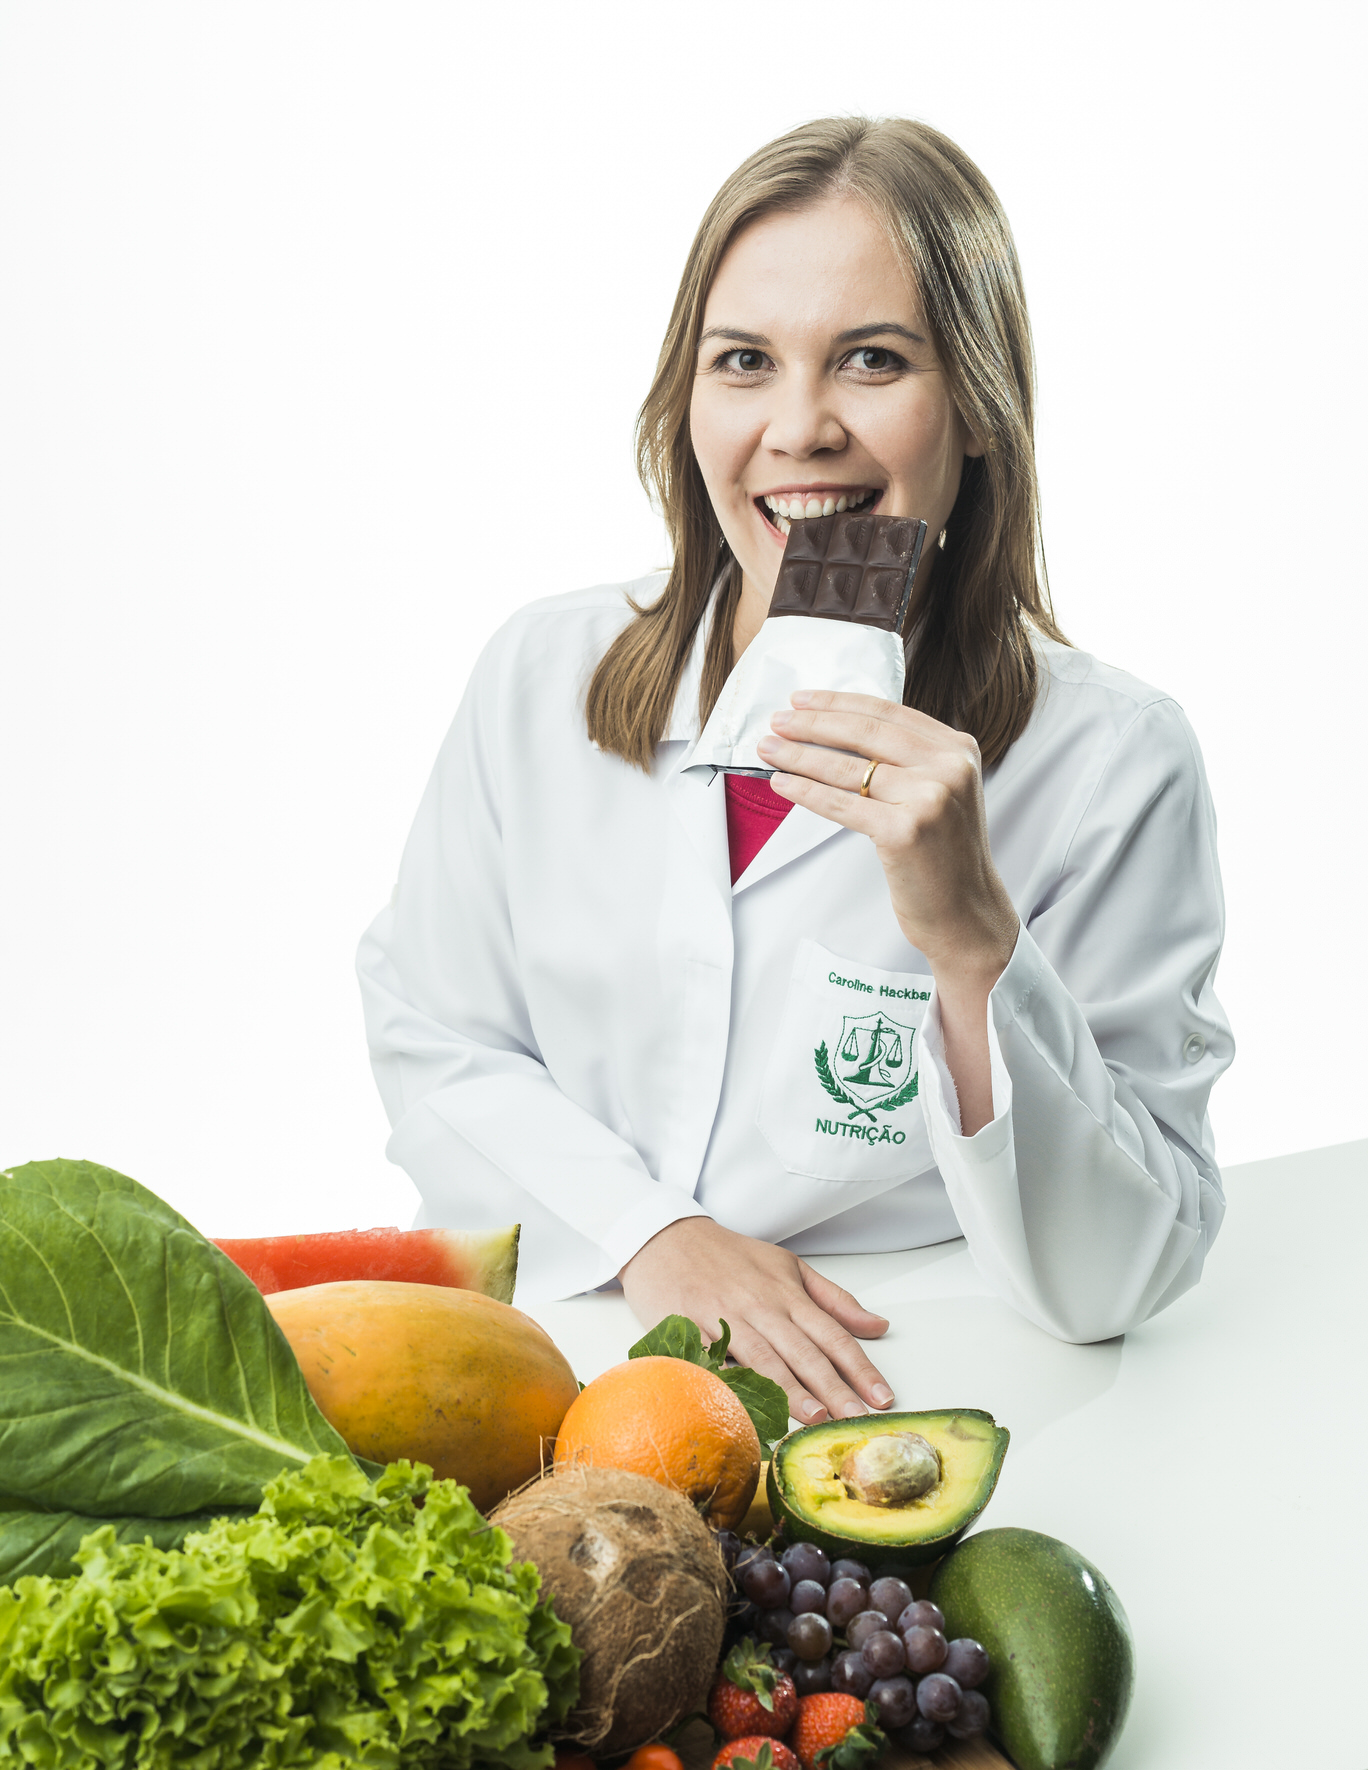 Perfil Profissional Nutricionista Caroline Hackbarth